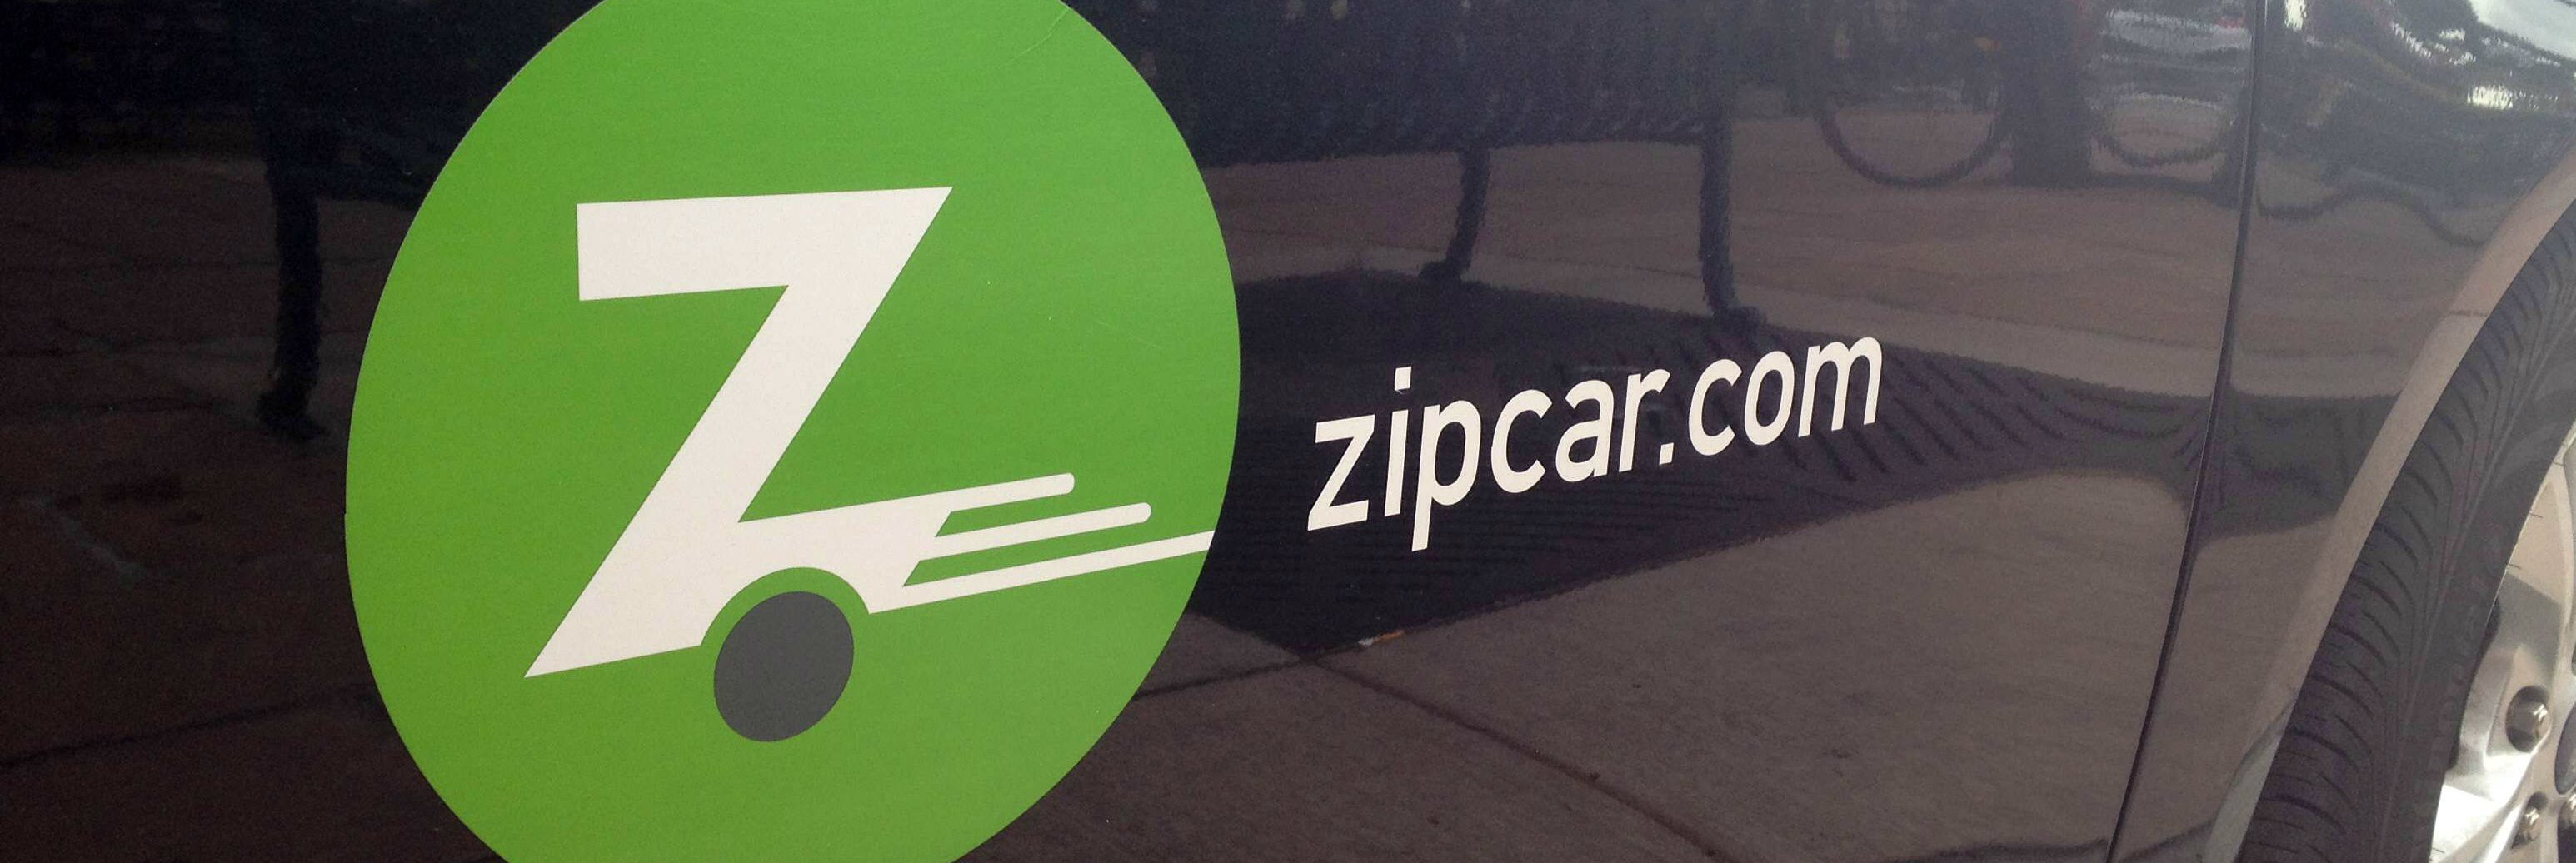 zipcar founders